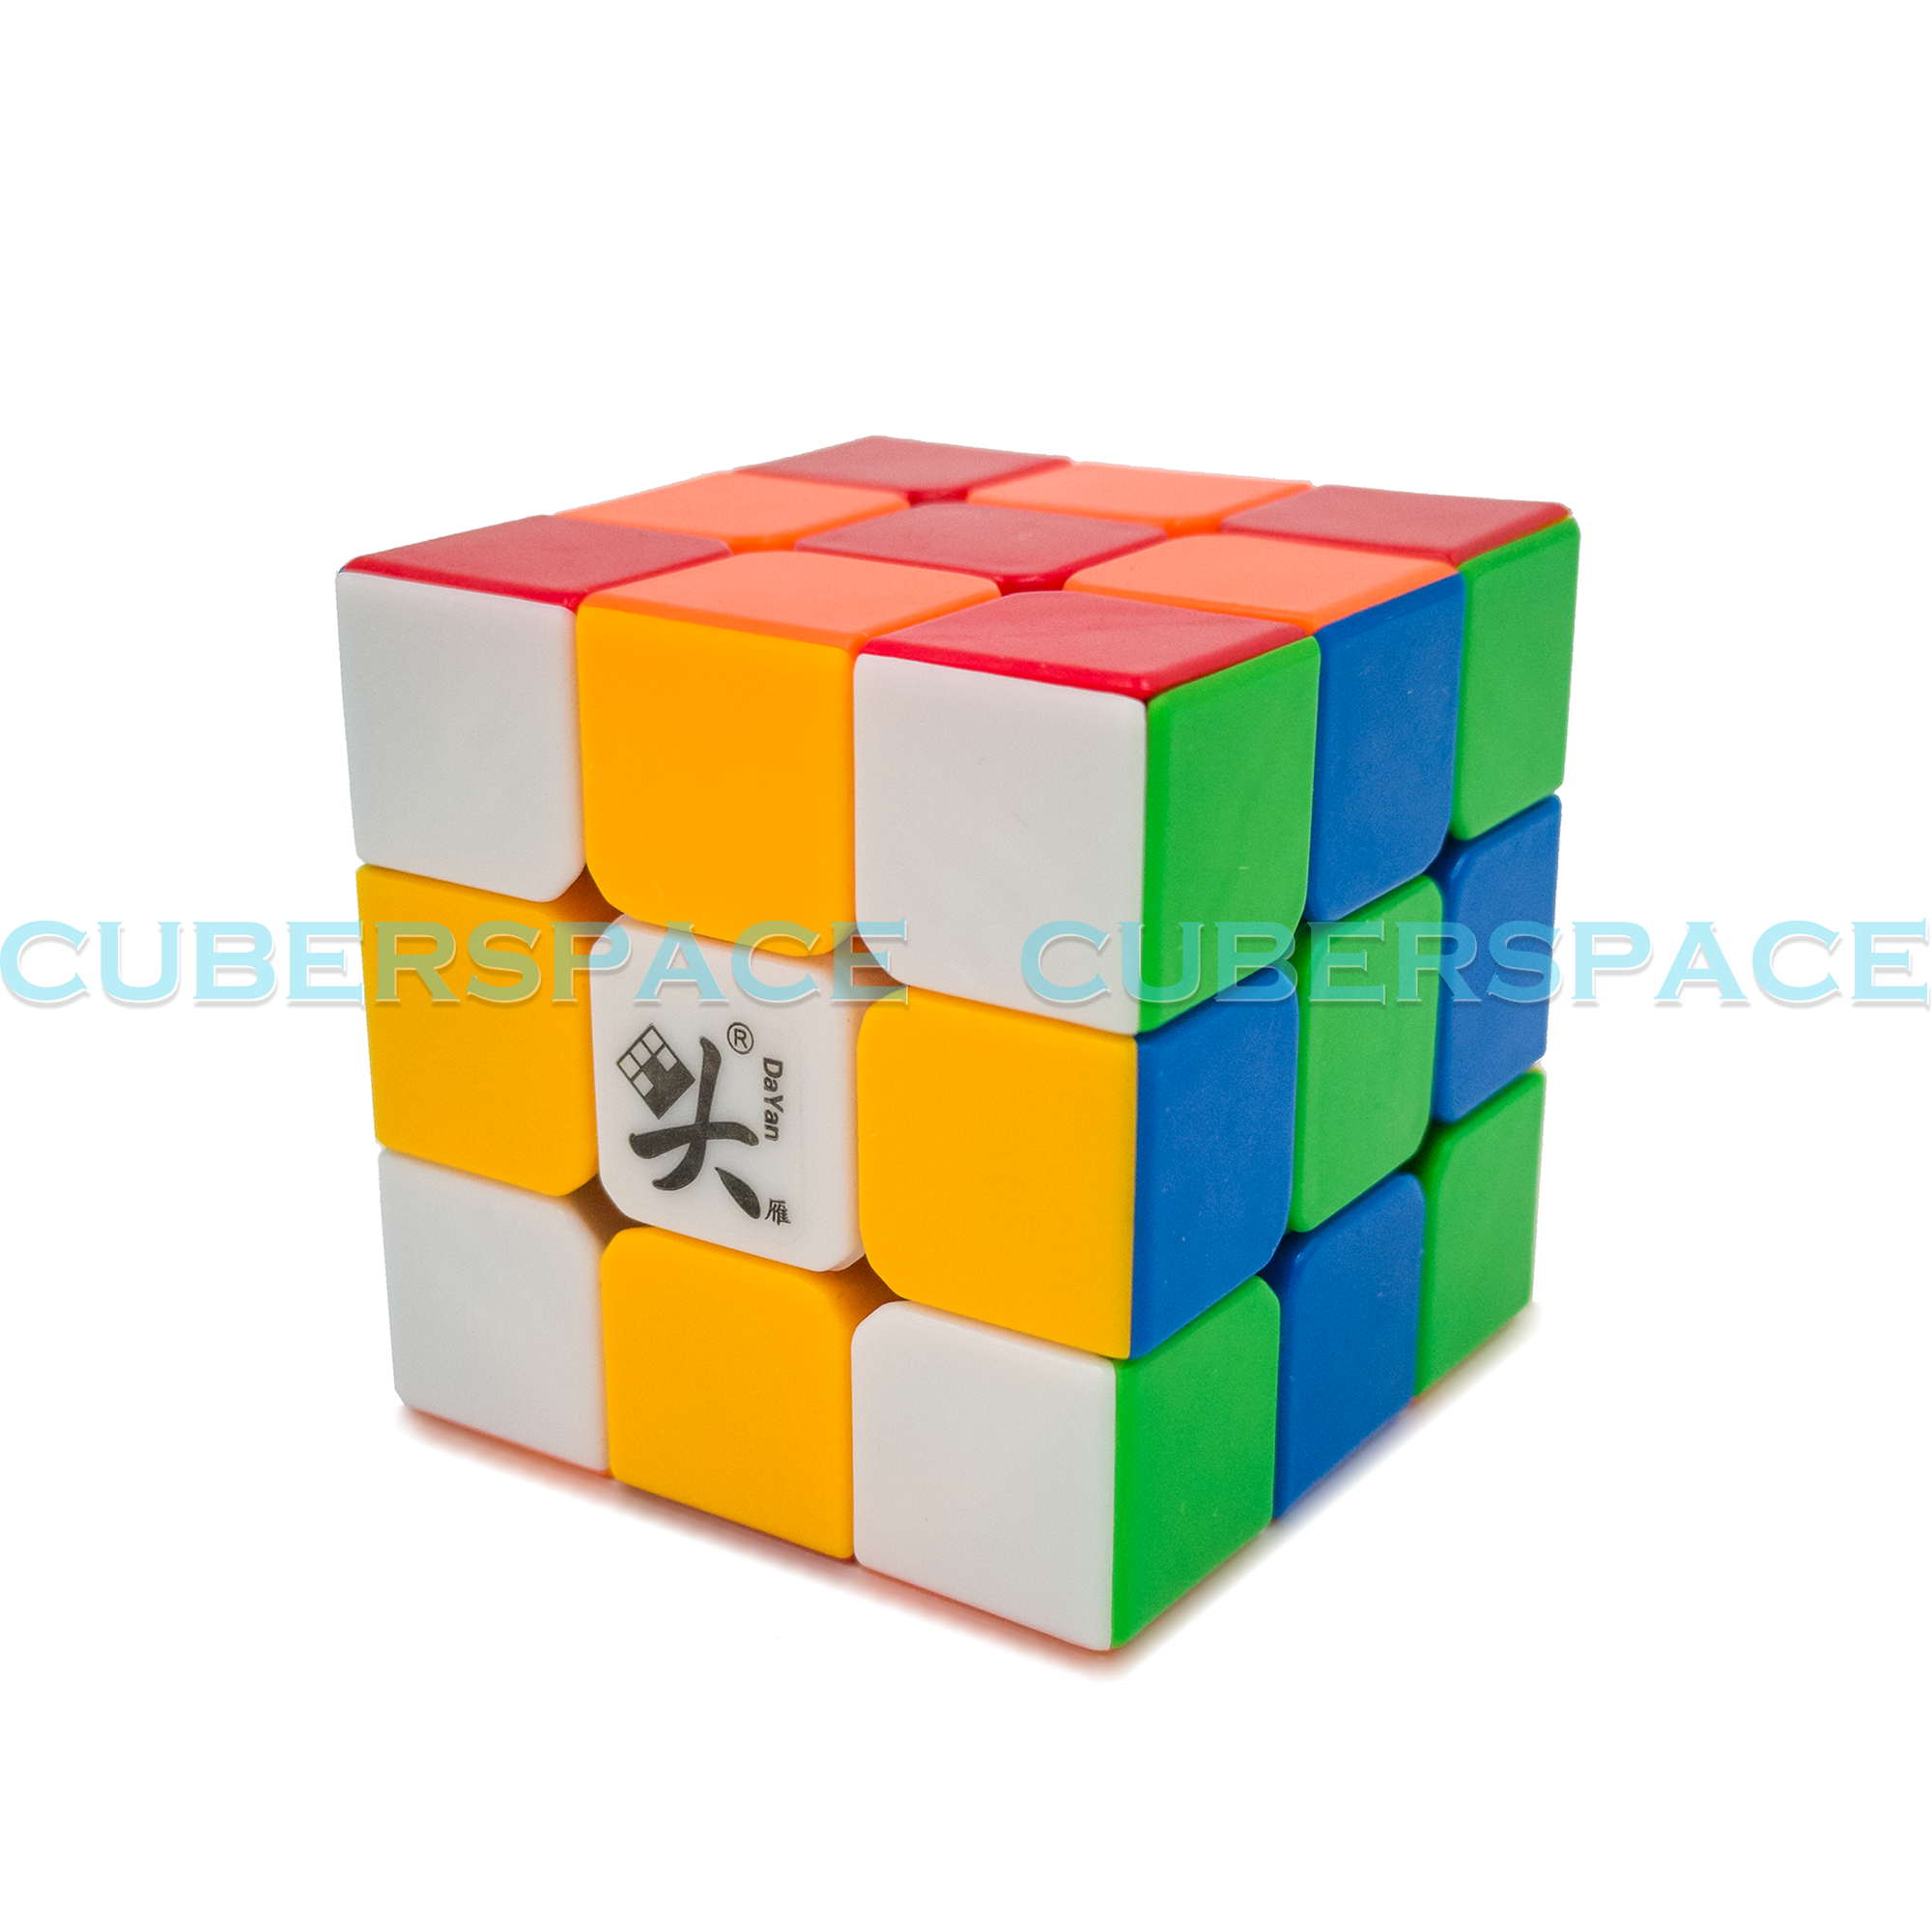 DaYan LingYun V2 - CuberSpace